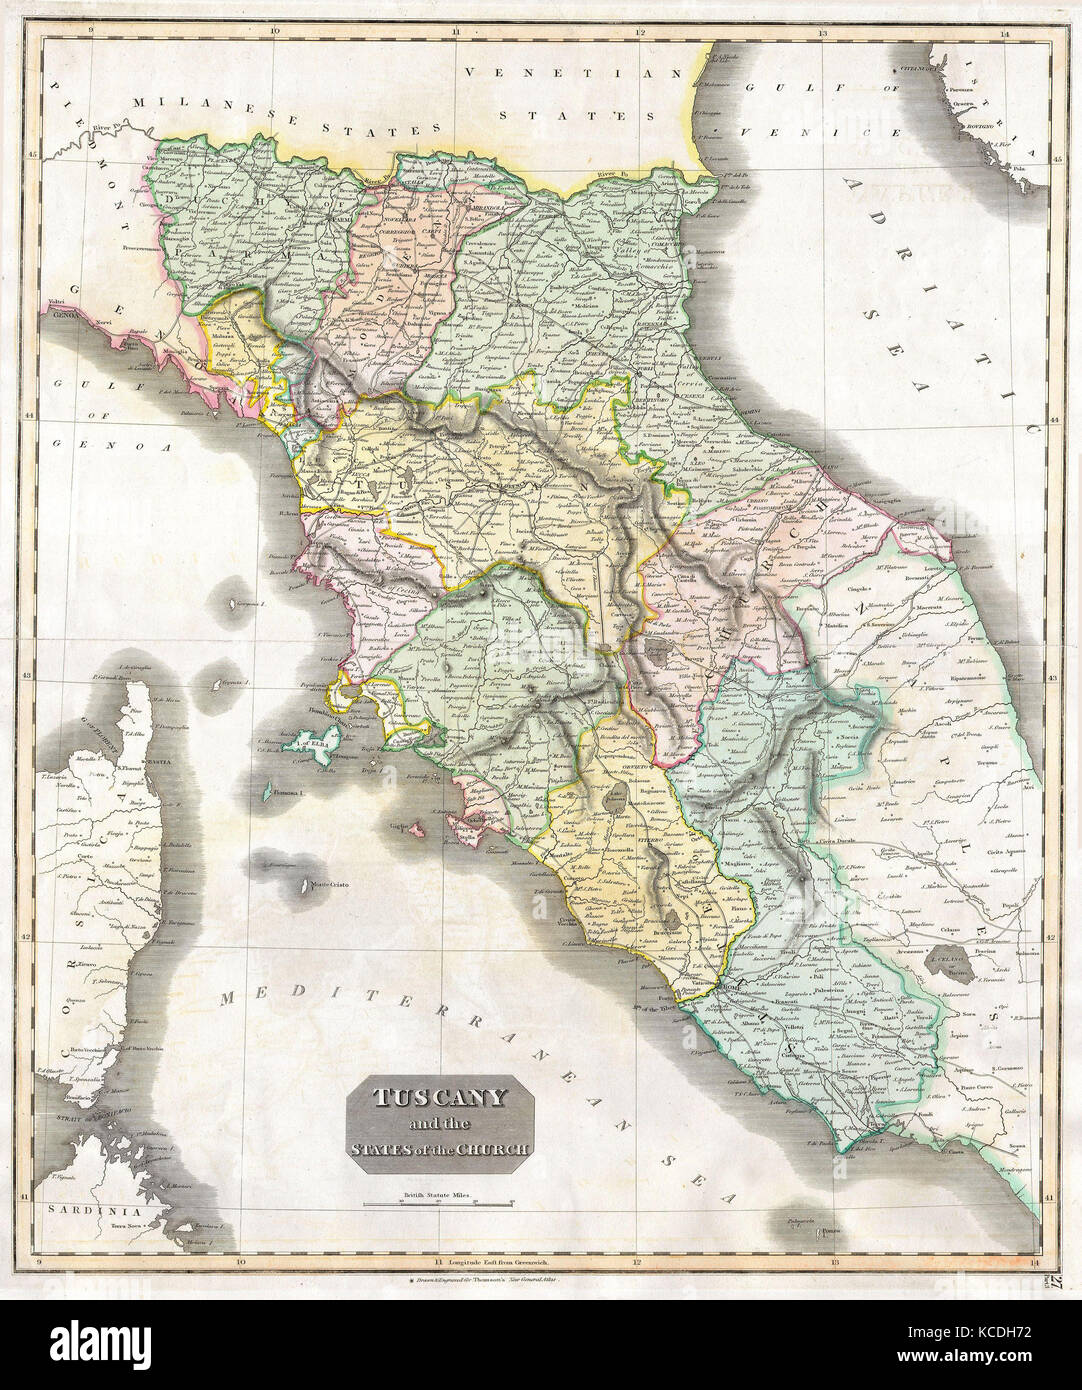 1814, Thomson Mapa de la Toscana, Florencia, Italia, John Thomson, 1777 - 1840, fue un cartógrafo Escocés de Edimburgo, Reino Unido Foto de stock